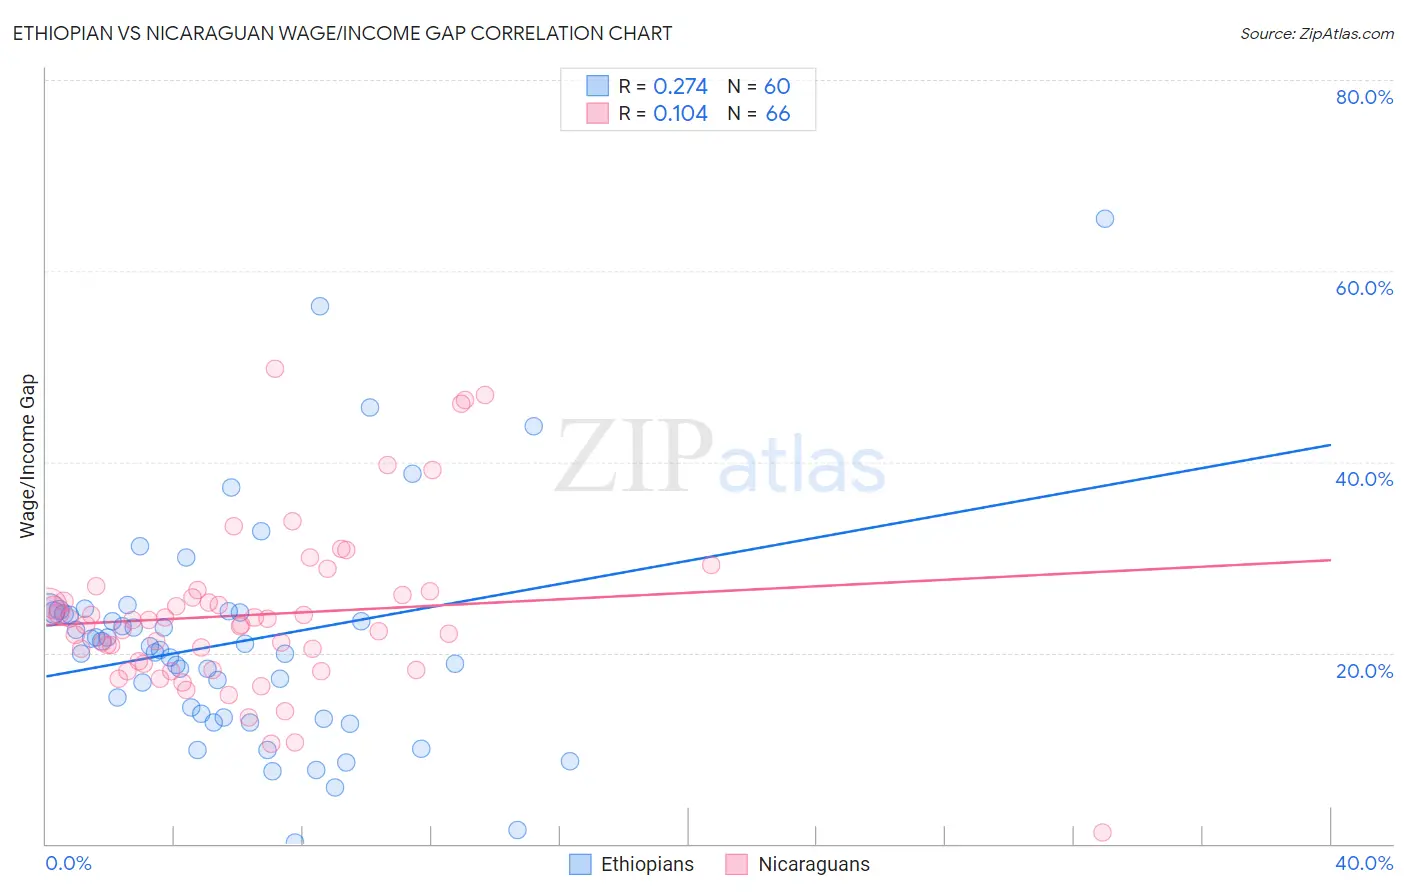 Ethiopian vs Nicaraguan Wage/Income Gap